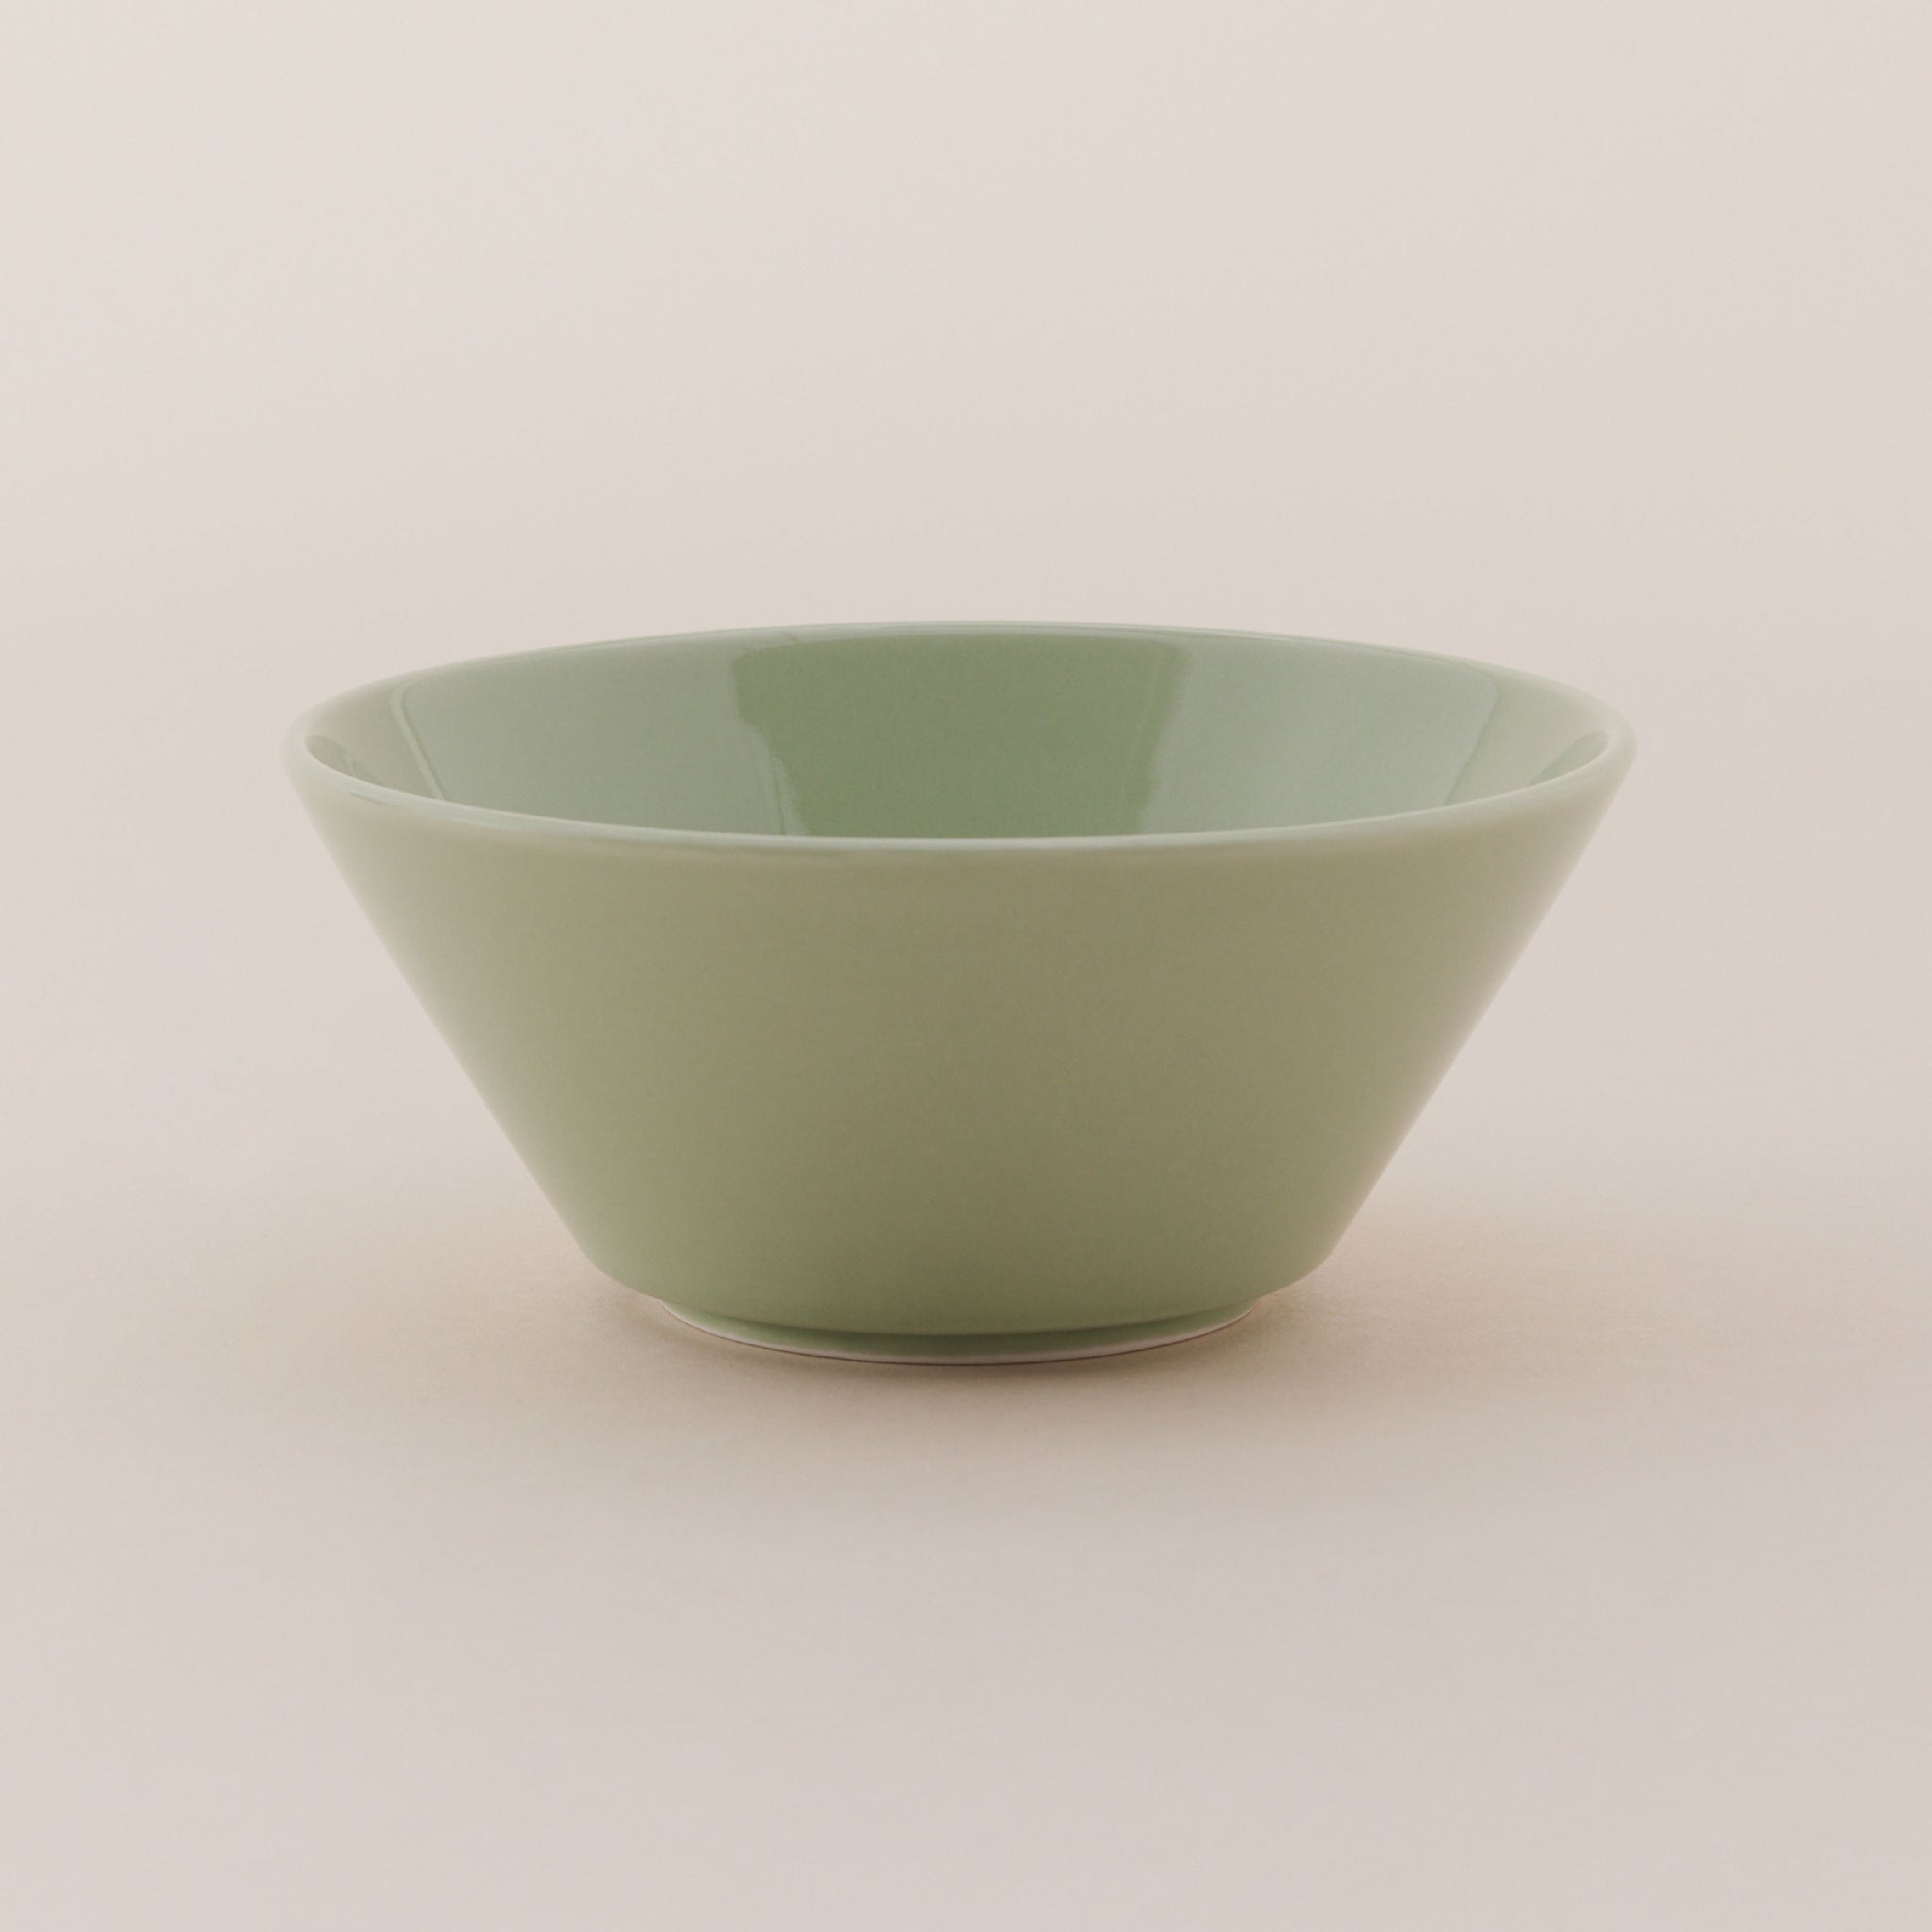 Bowlbowl Ceramic Urban Bowl 14 cm | ชามเซรามิก